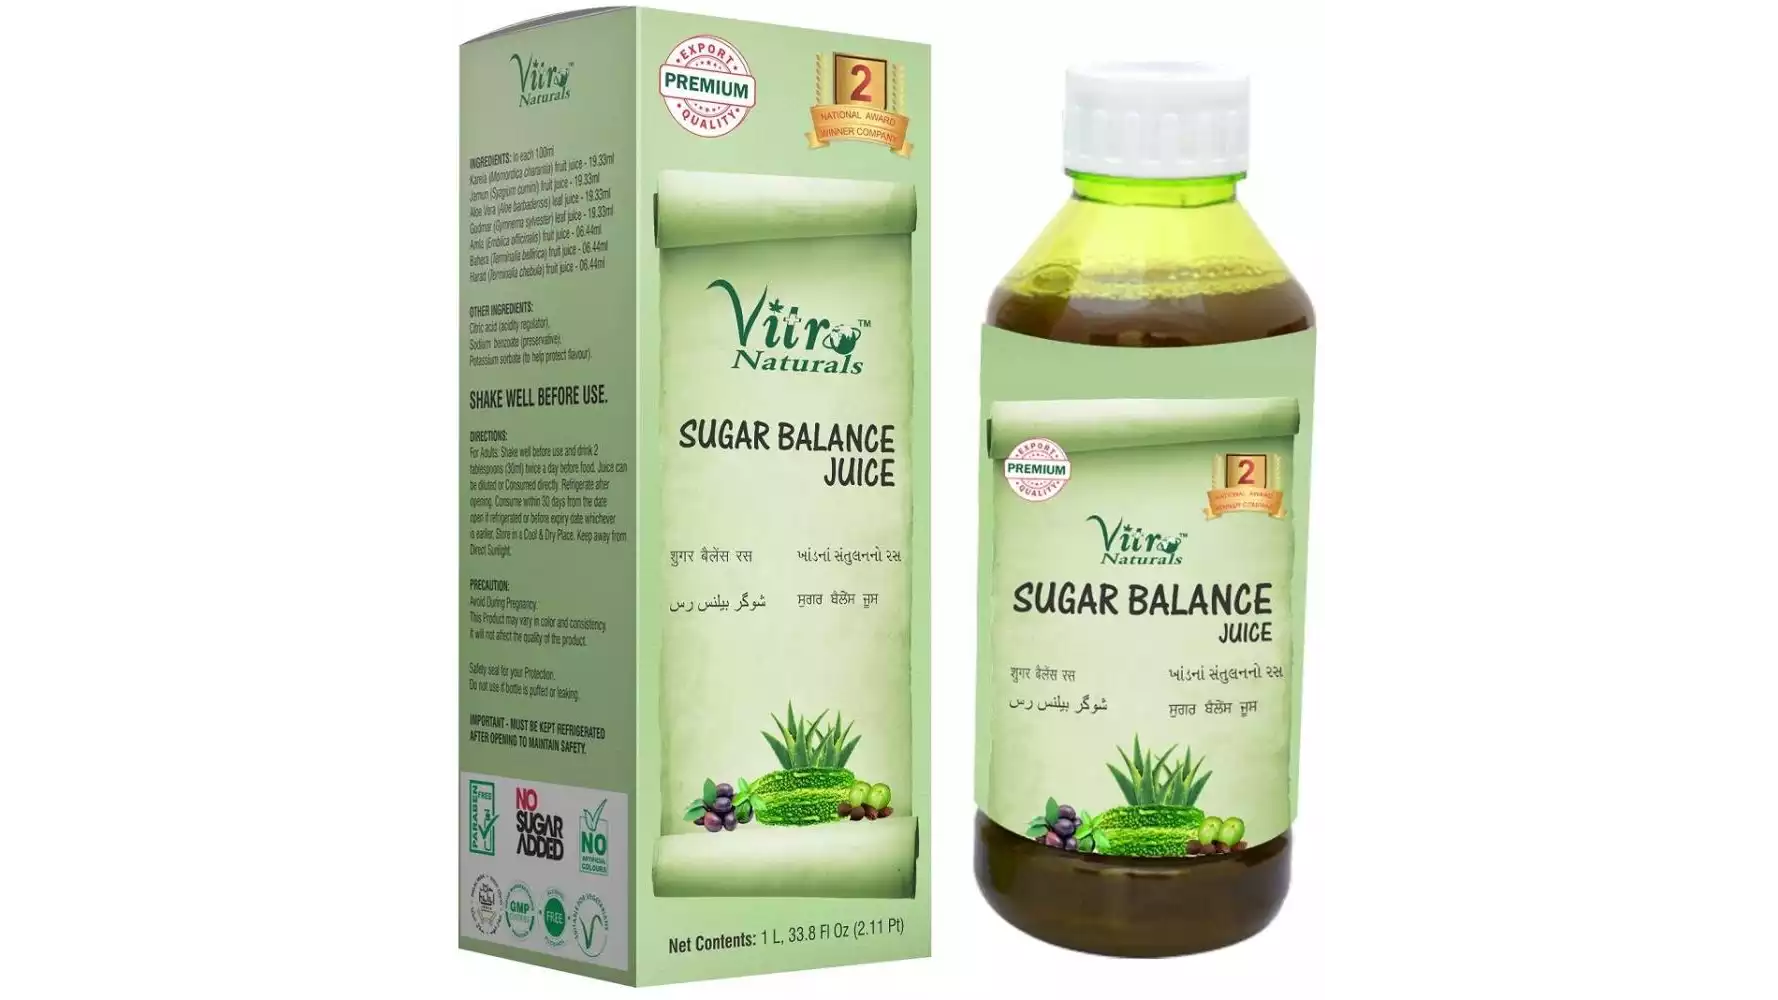 Vitro Naturals Sugar Balance Juice (1liter)